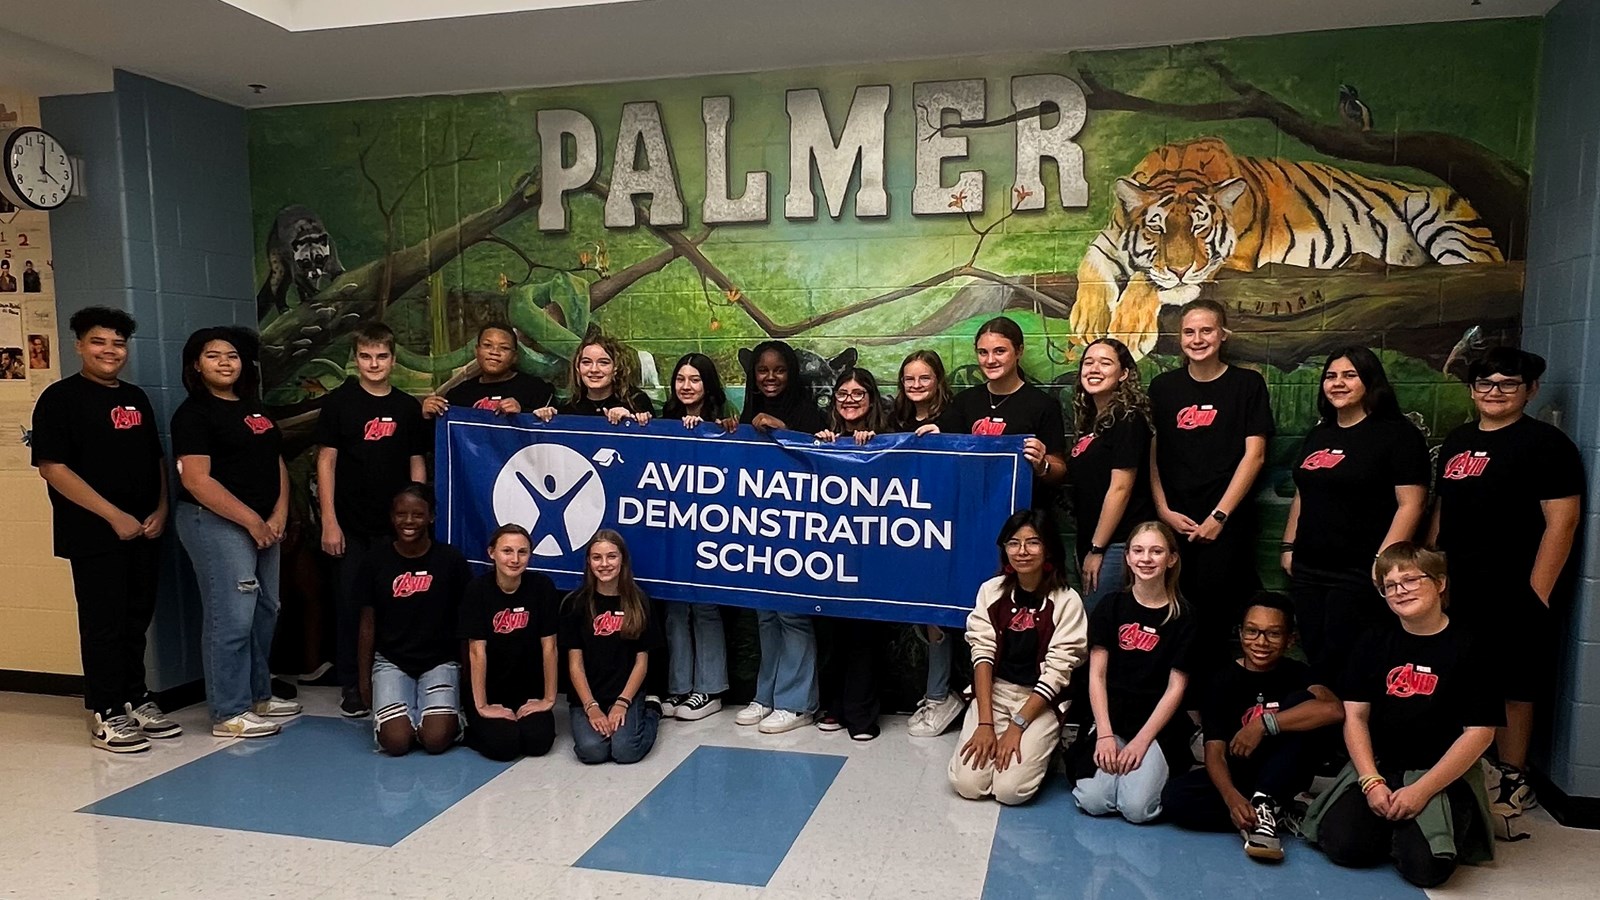 Palmer Middle School serves as AVID National Demonstration School